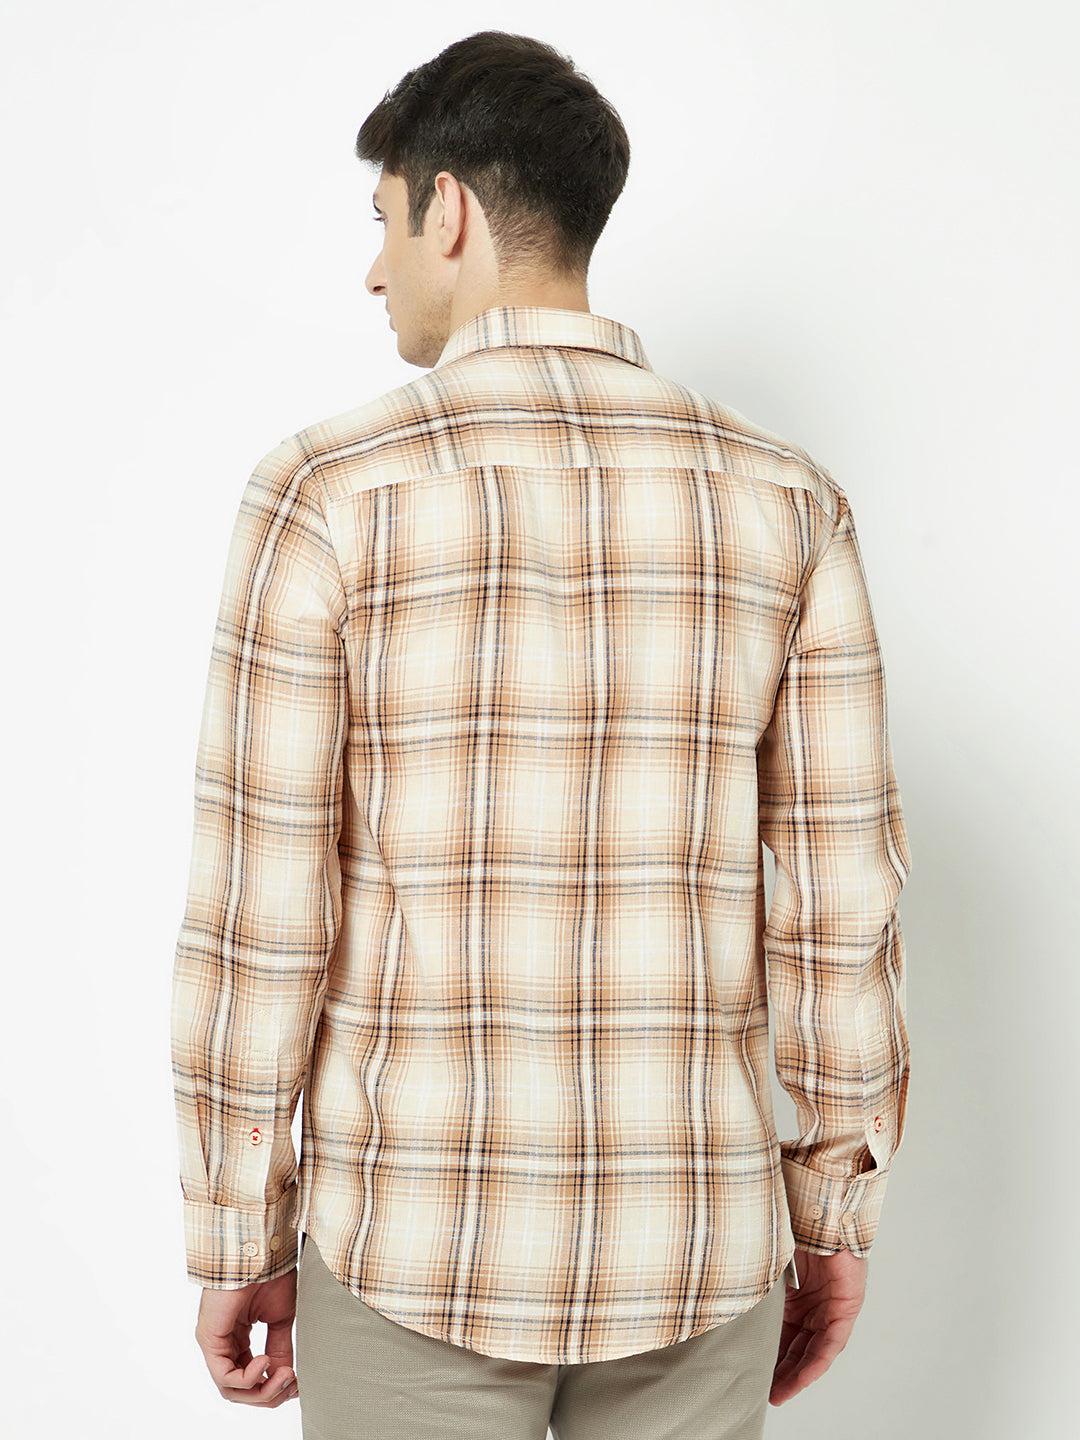  Brown-Toned Checkered Shirt